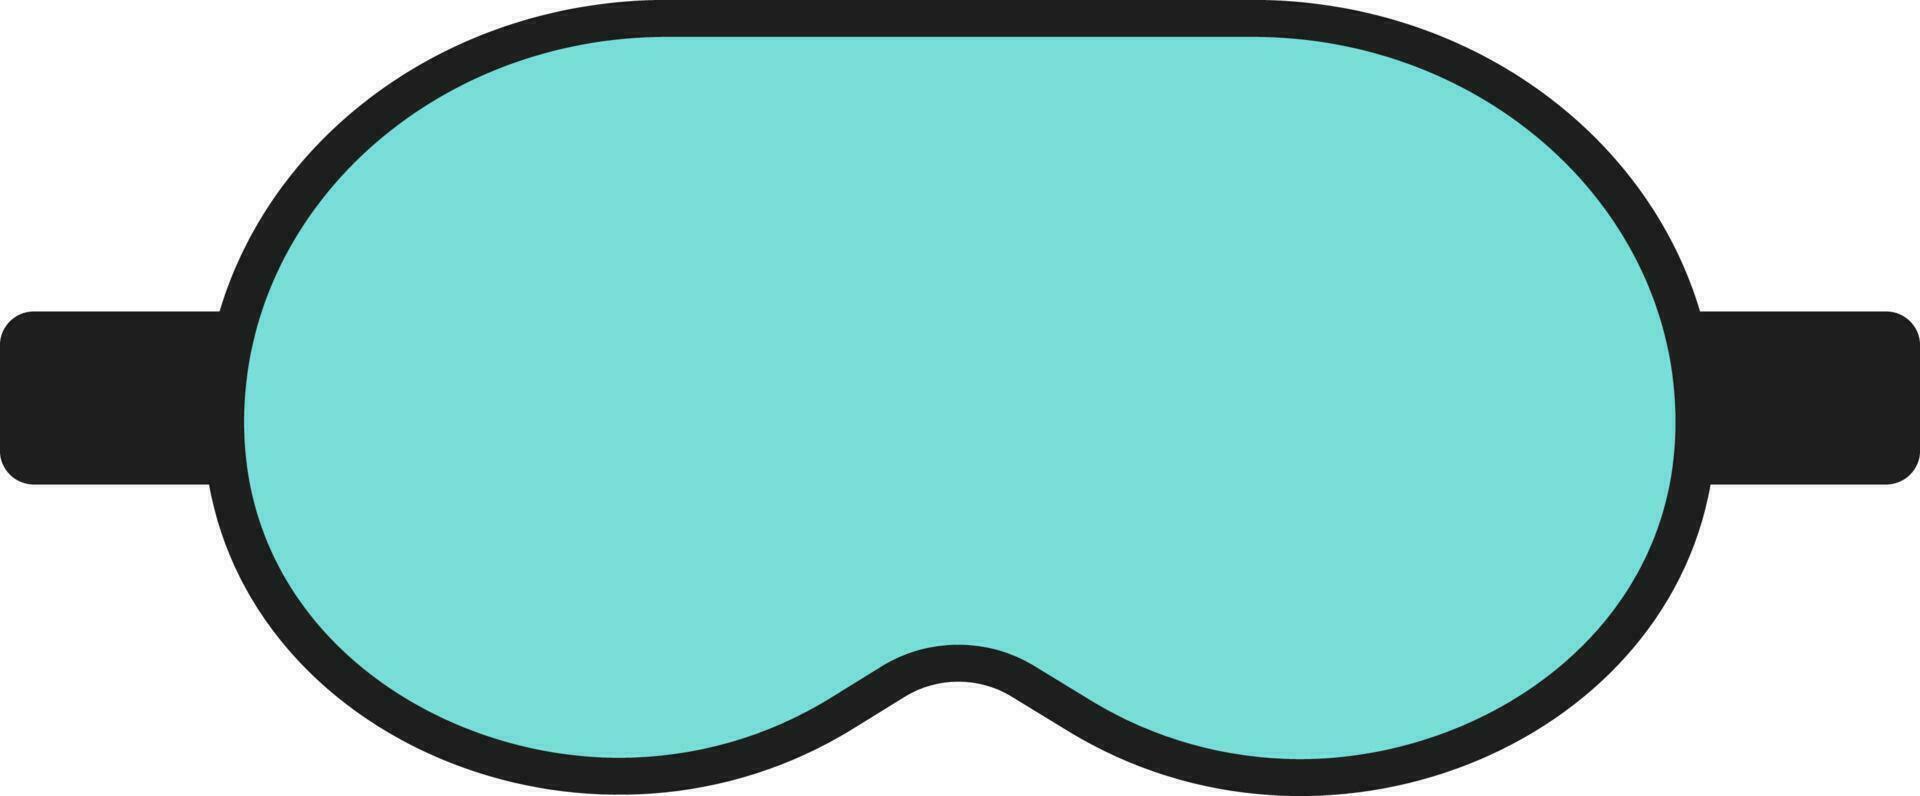 azul e Preto óculos ícone dentro plano estilo. vetor